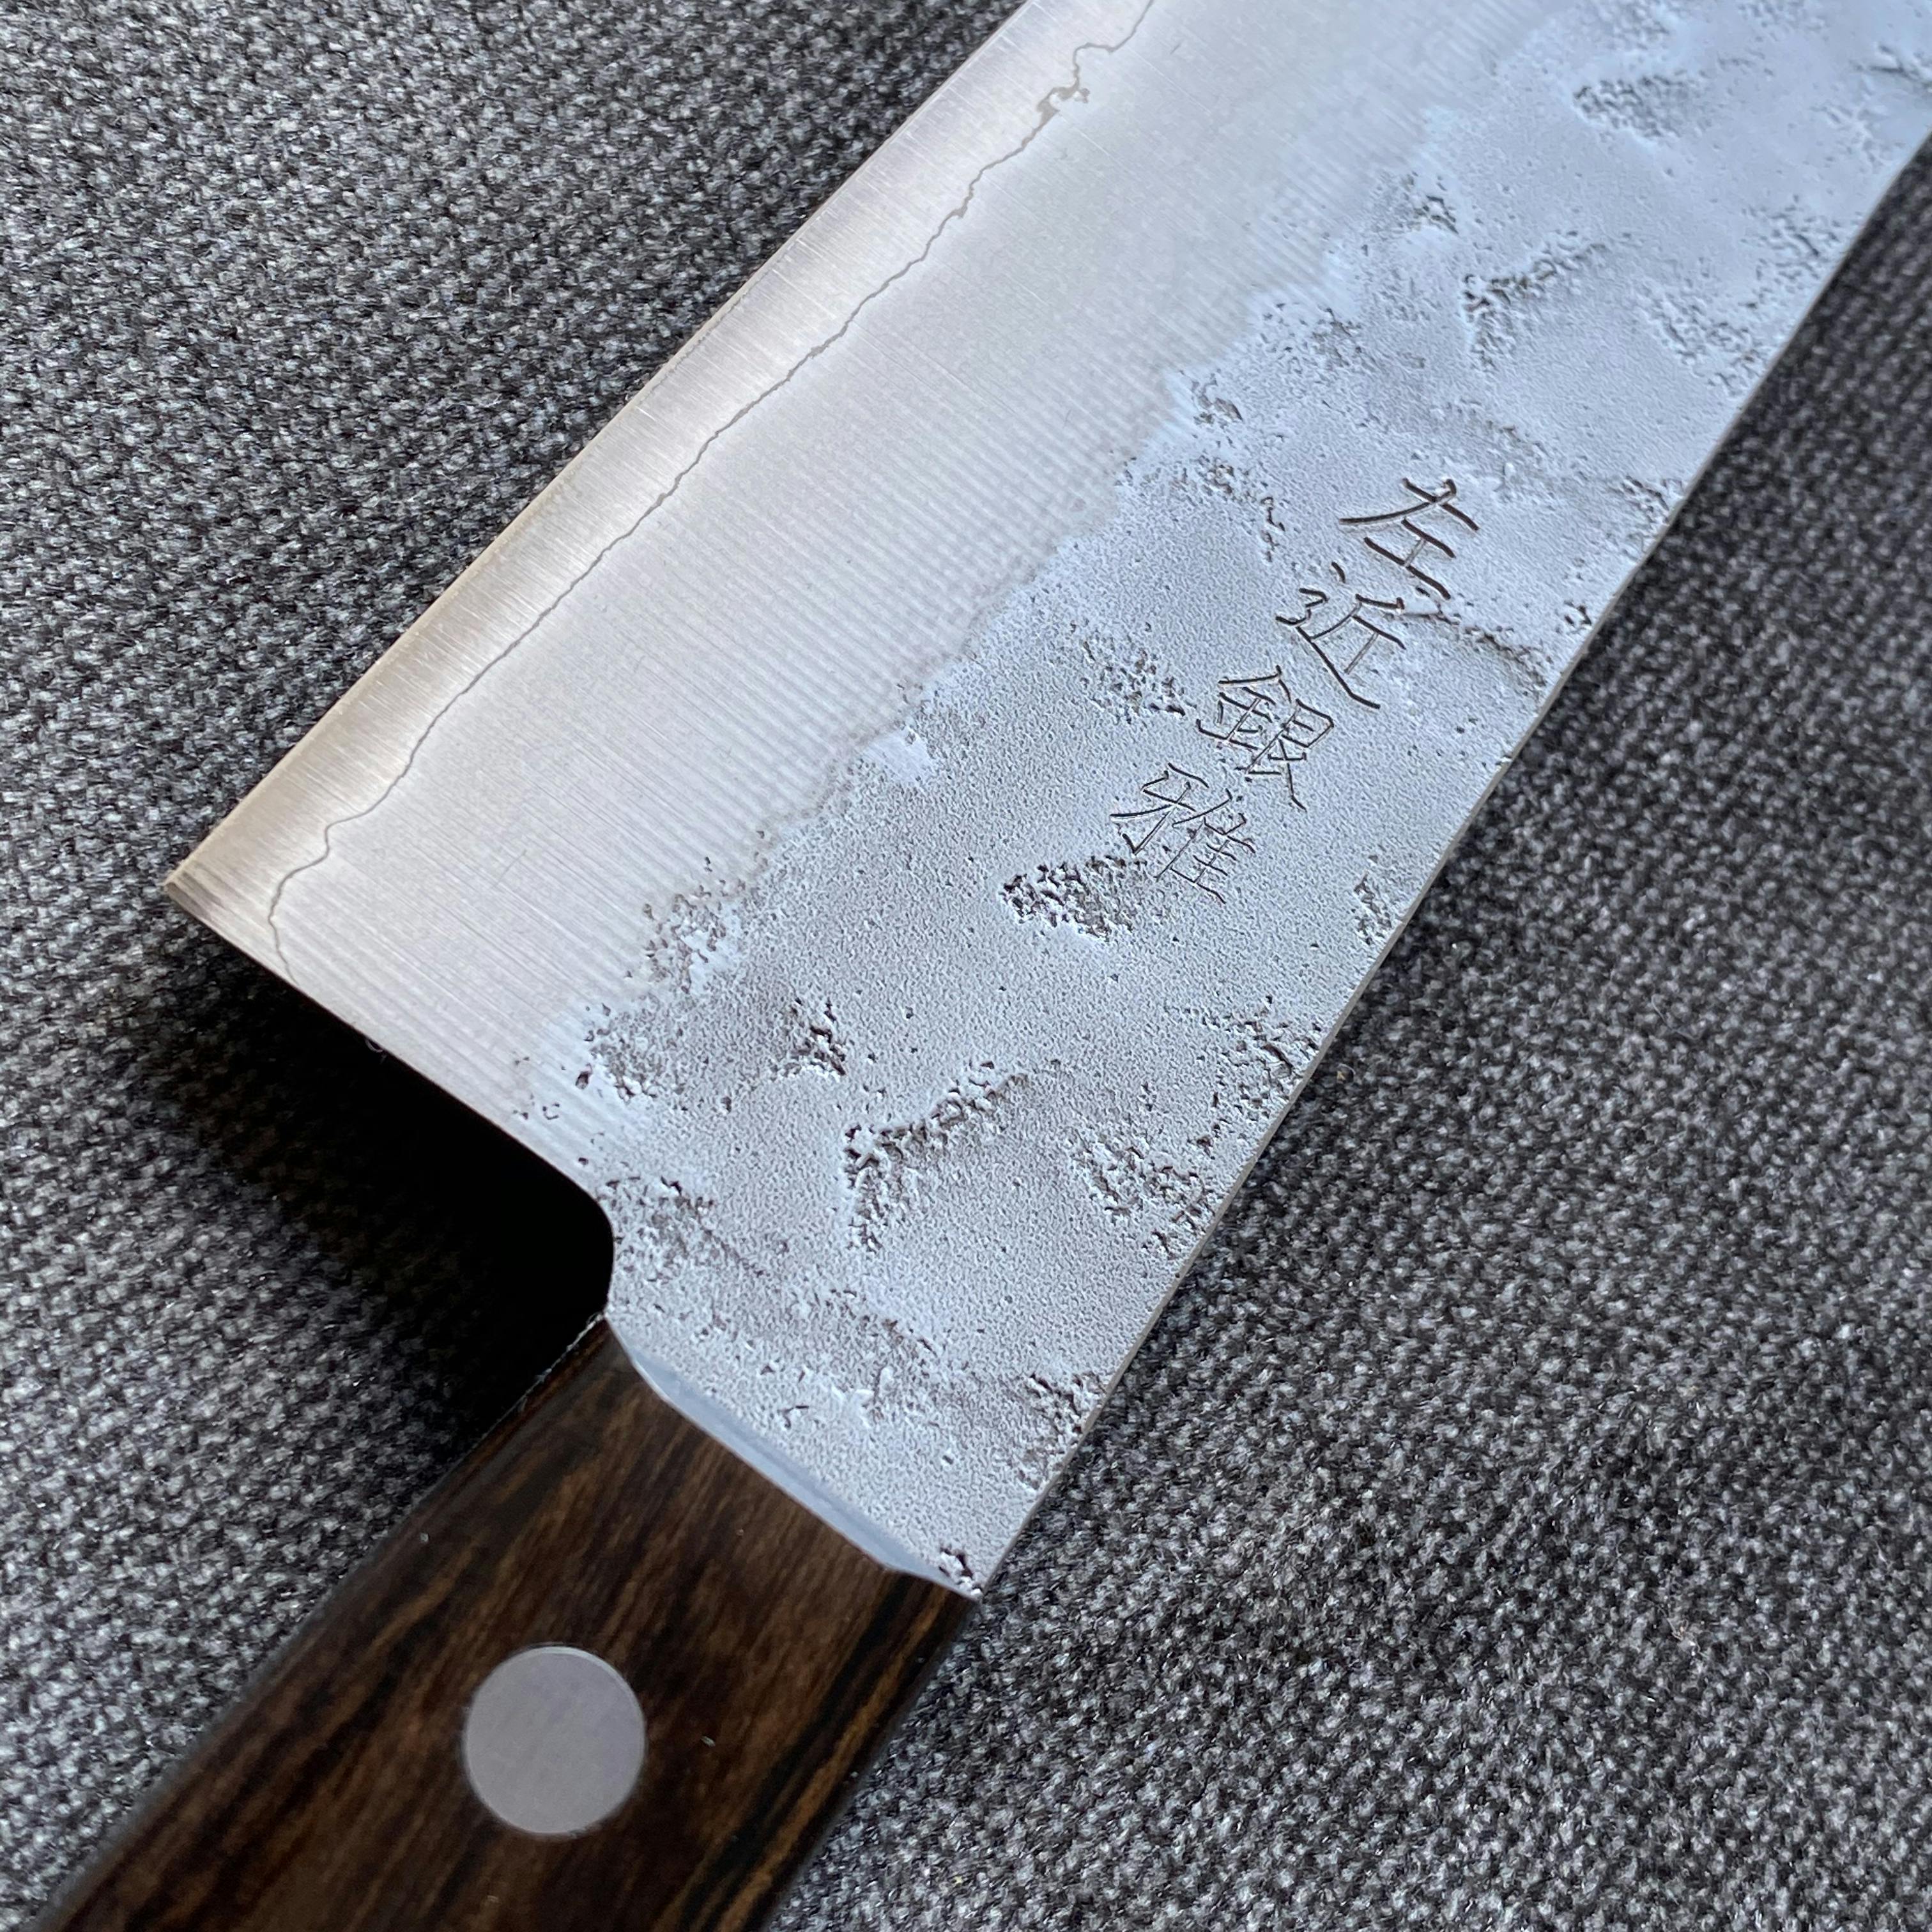 Japanese Chef Knives by SharpEdge Hokiyama Gyuto